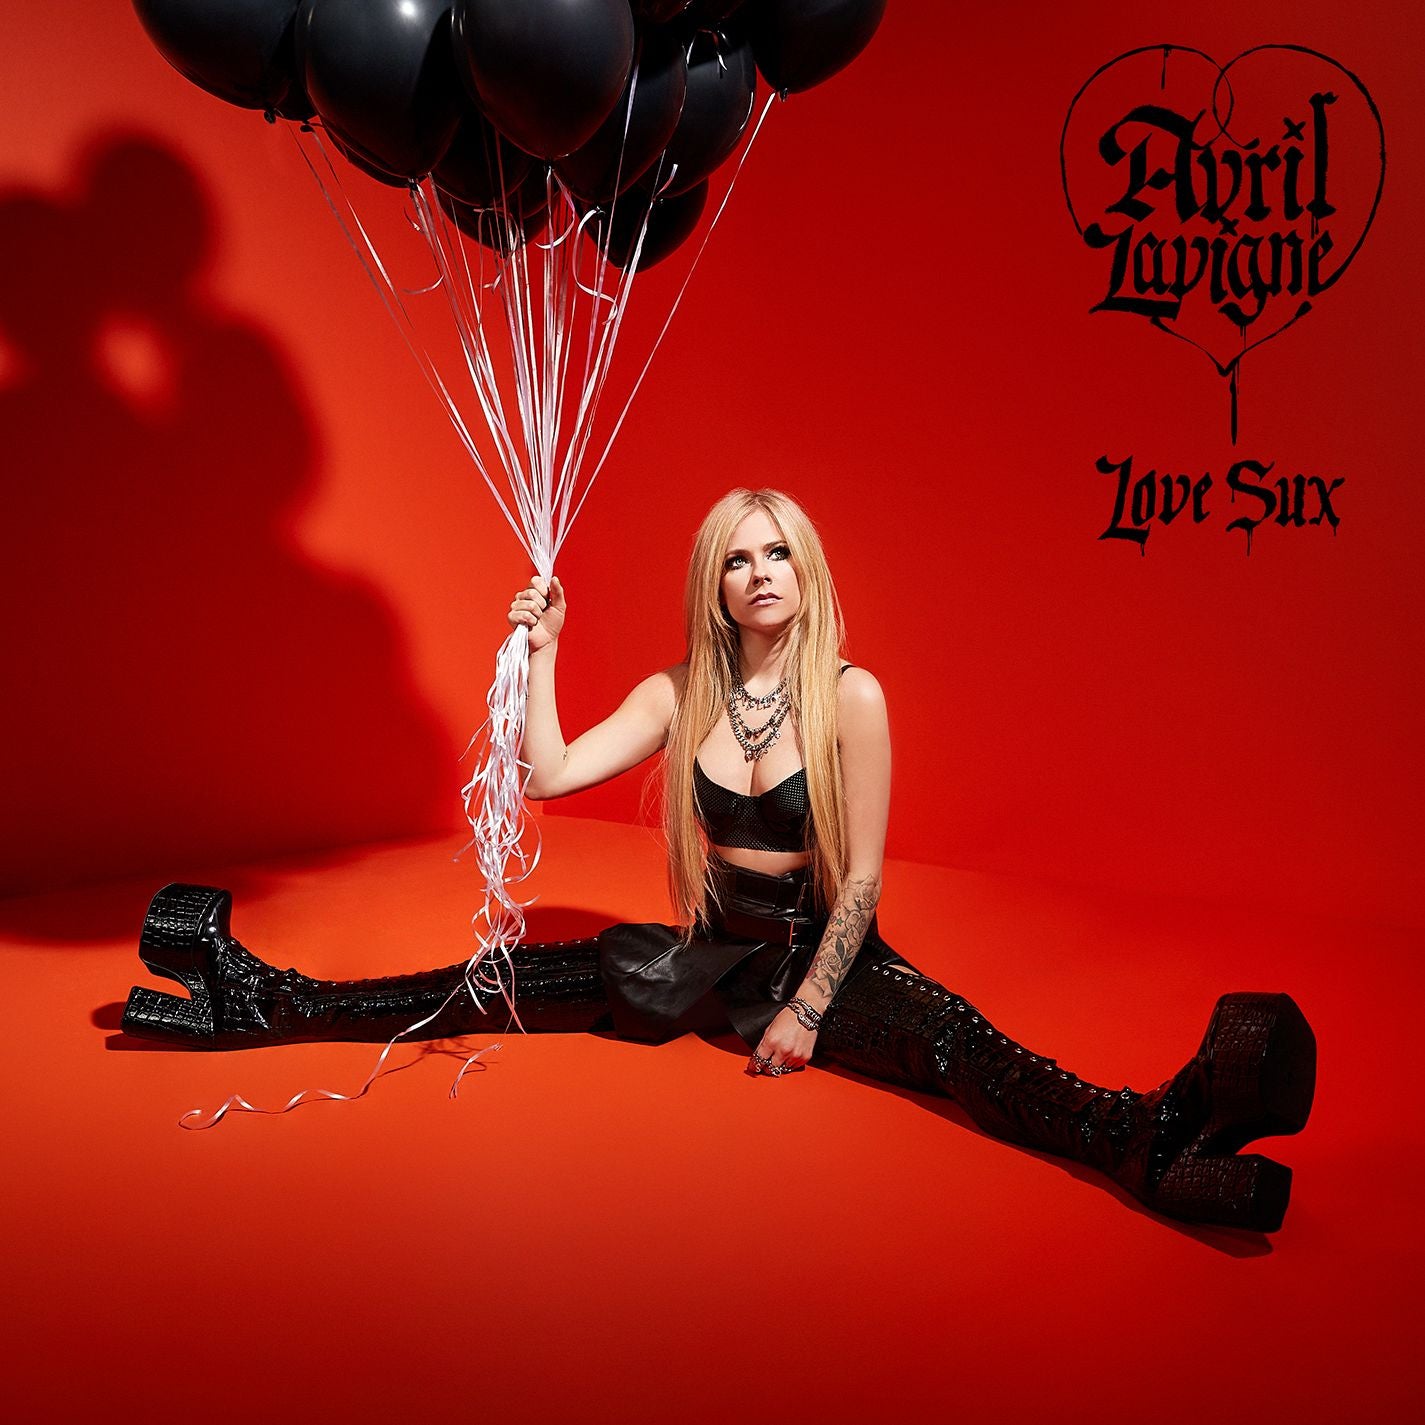 Artwork for Avril Lavigne’s new album, ‘Love Sux’